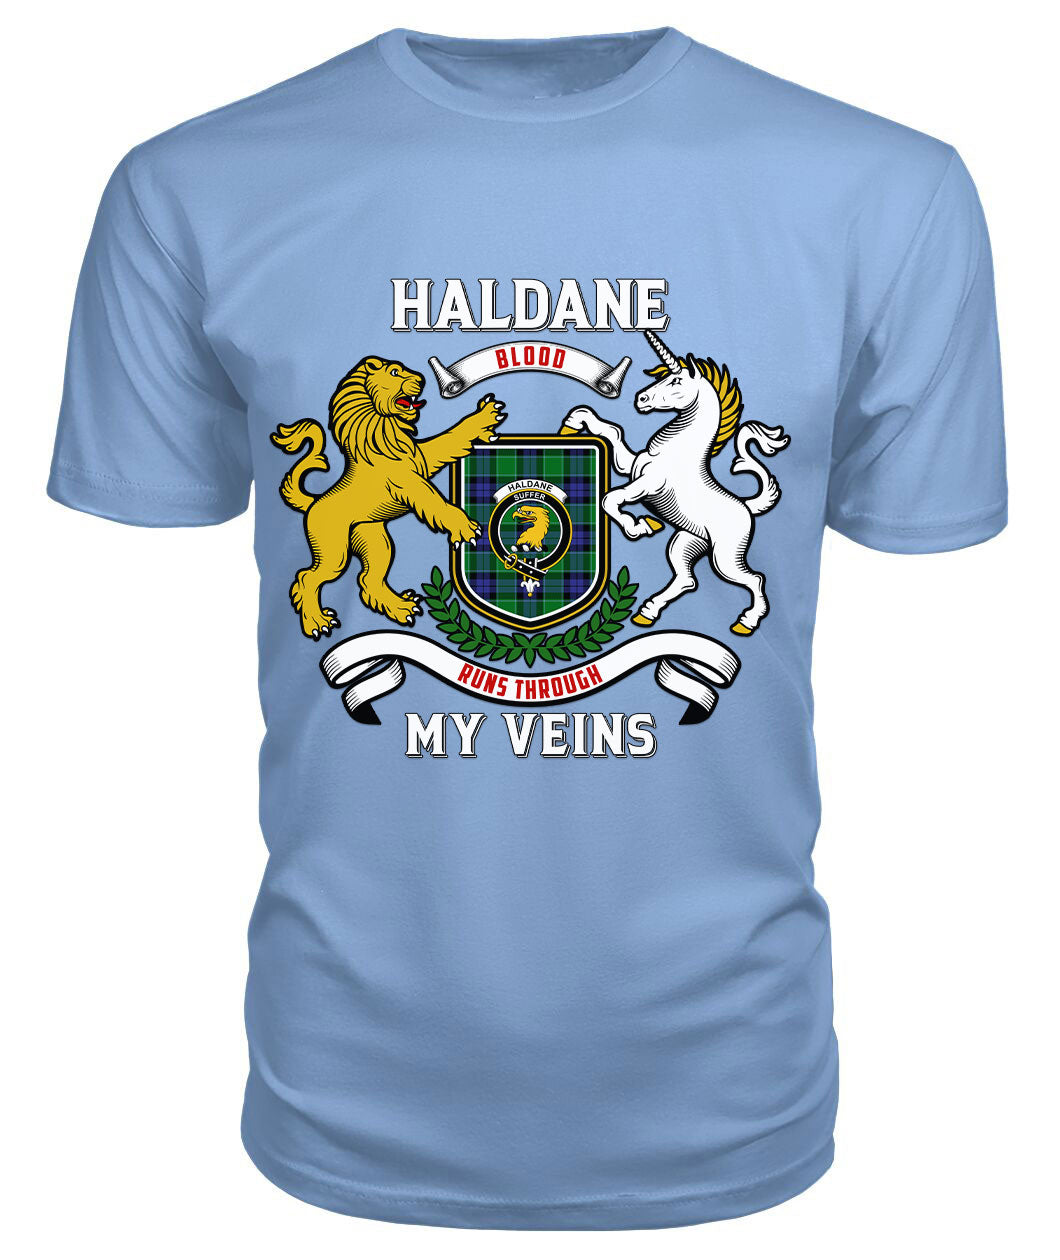 Haldane Tartan Crest 2D T-shirt - Blood Runs Through My Veins Style